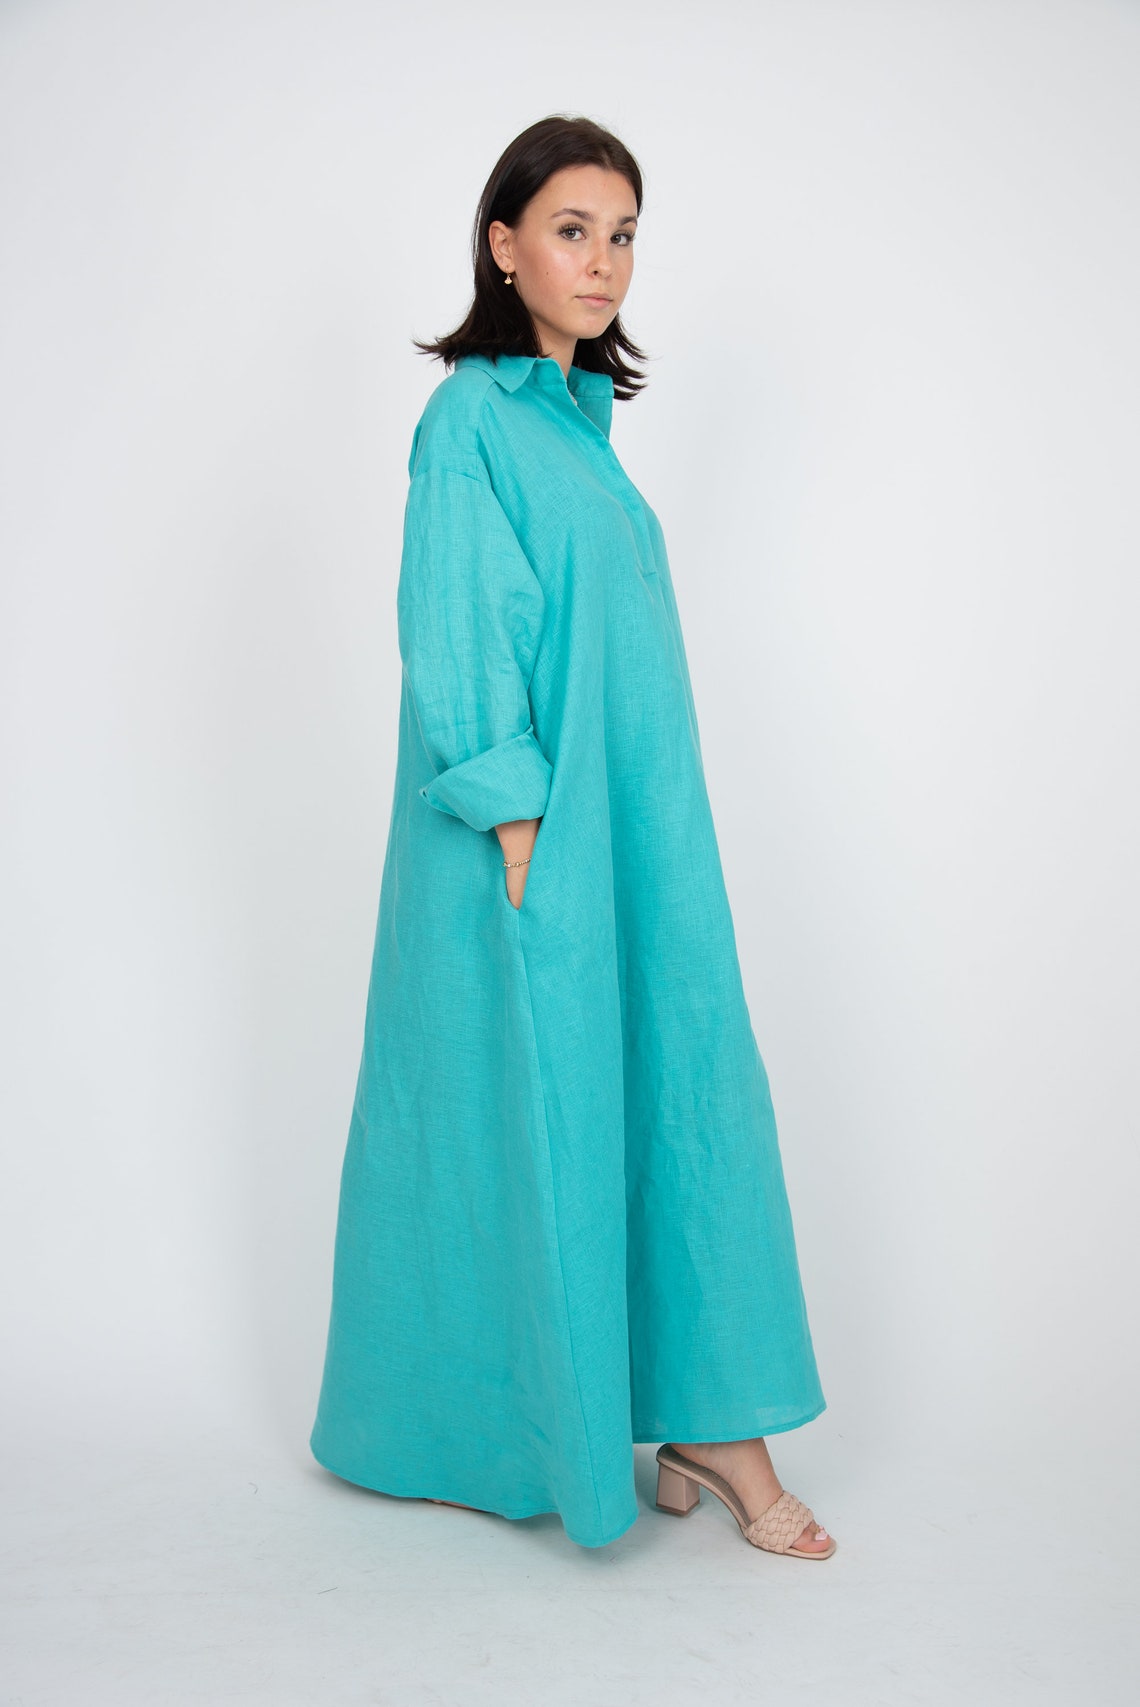 Turquoise Linen Dress/linen Shirt Dress/oversized Shirt - Etsy